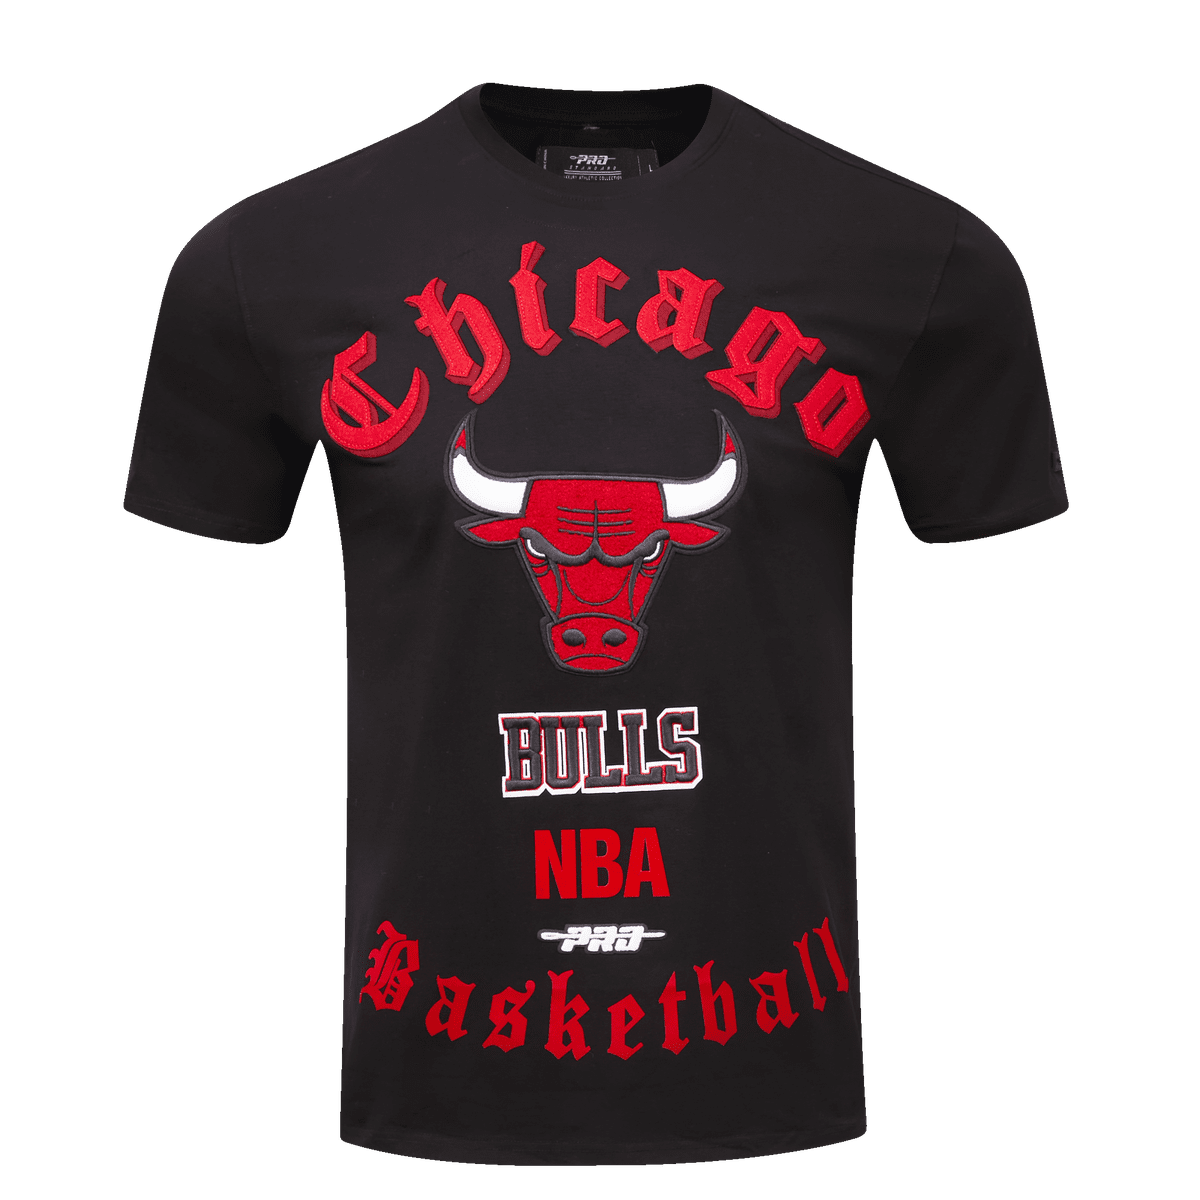 Pro Standard NBA Chicago Bulls Pro Team Red Track Pants BCB452968-RED